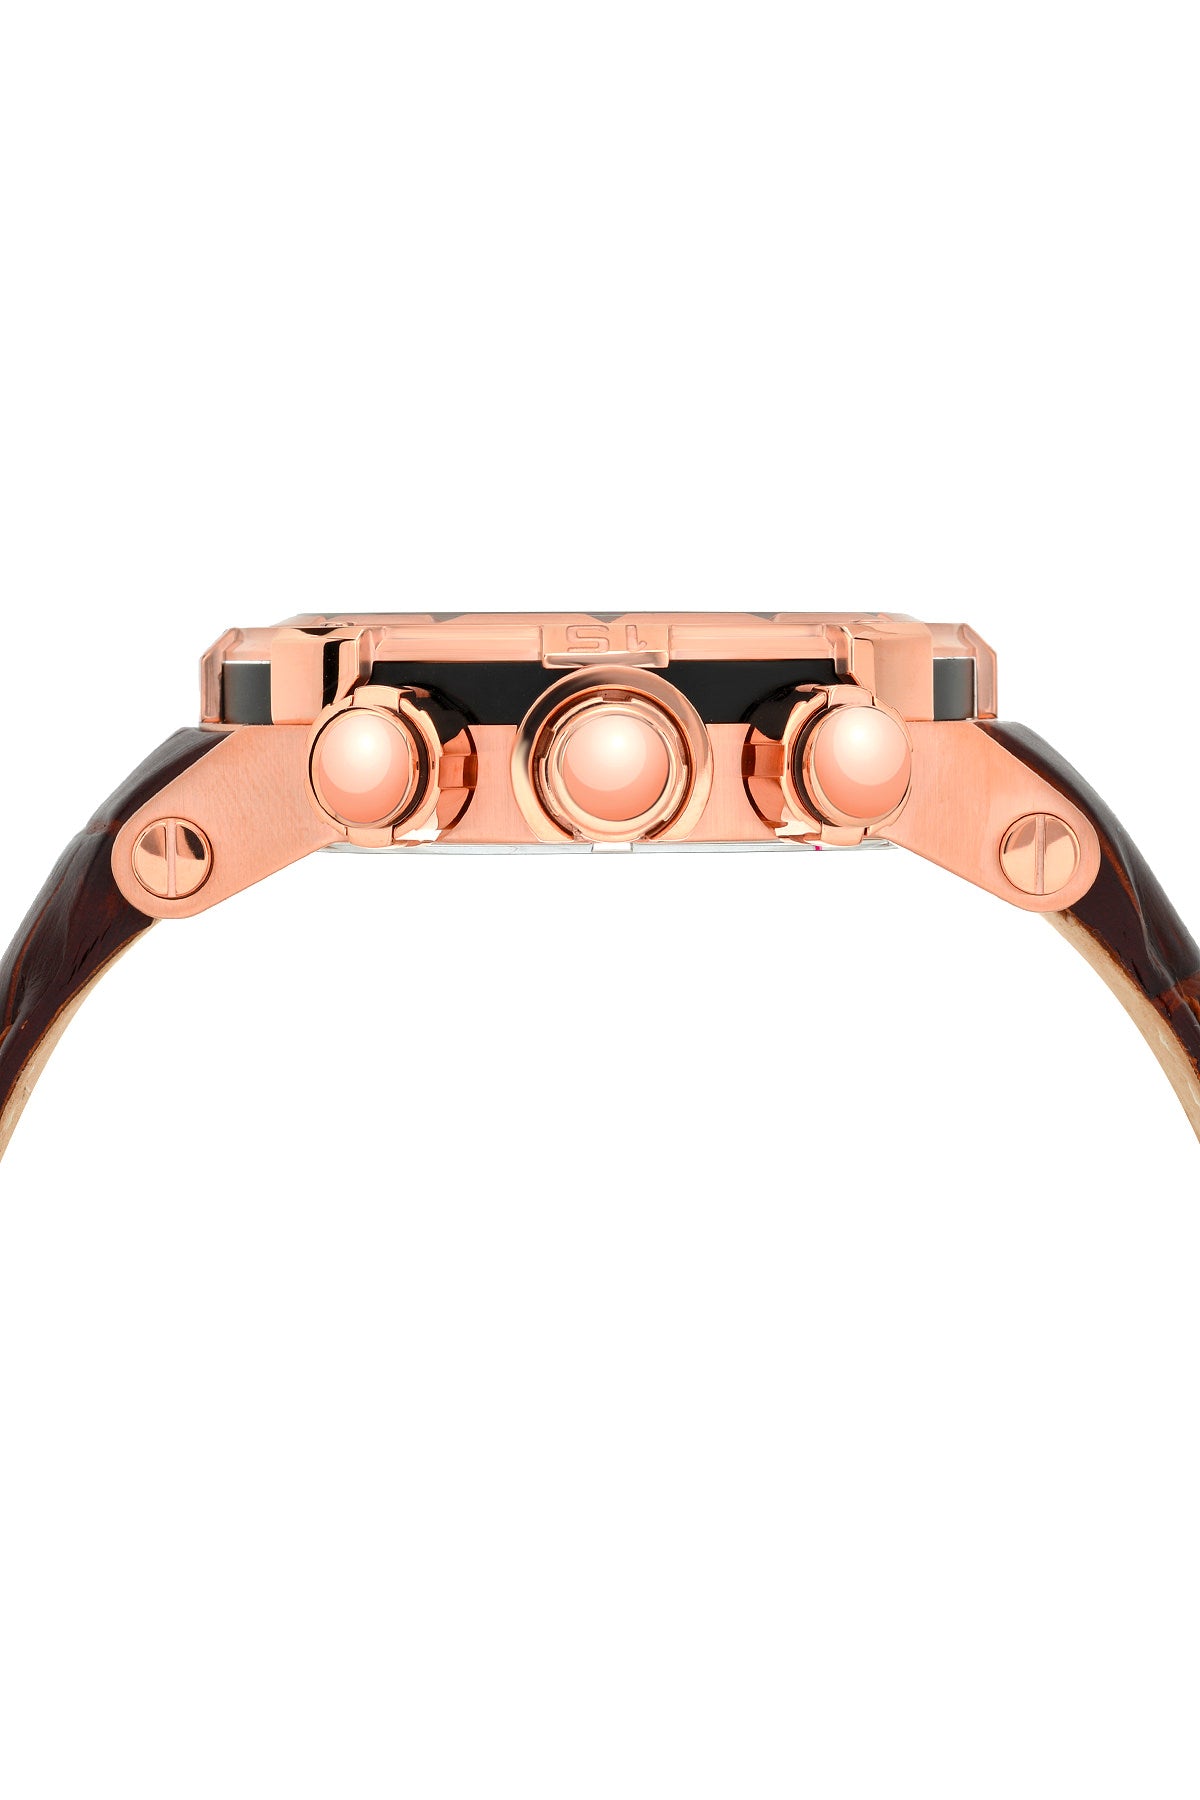 Porsamo Bleu Antonio luxury chronograph men's watch, genuine leather band, rose, brown 611CANL